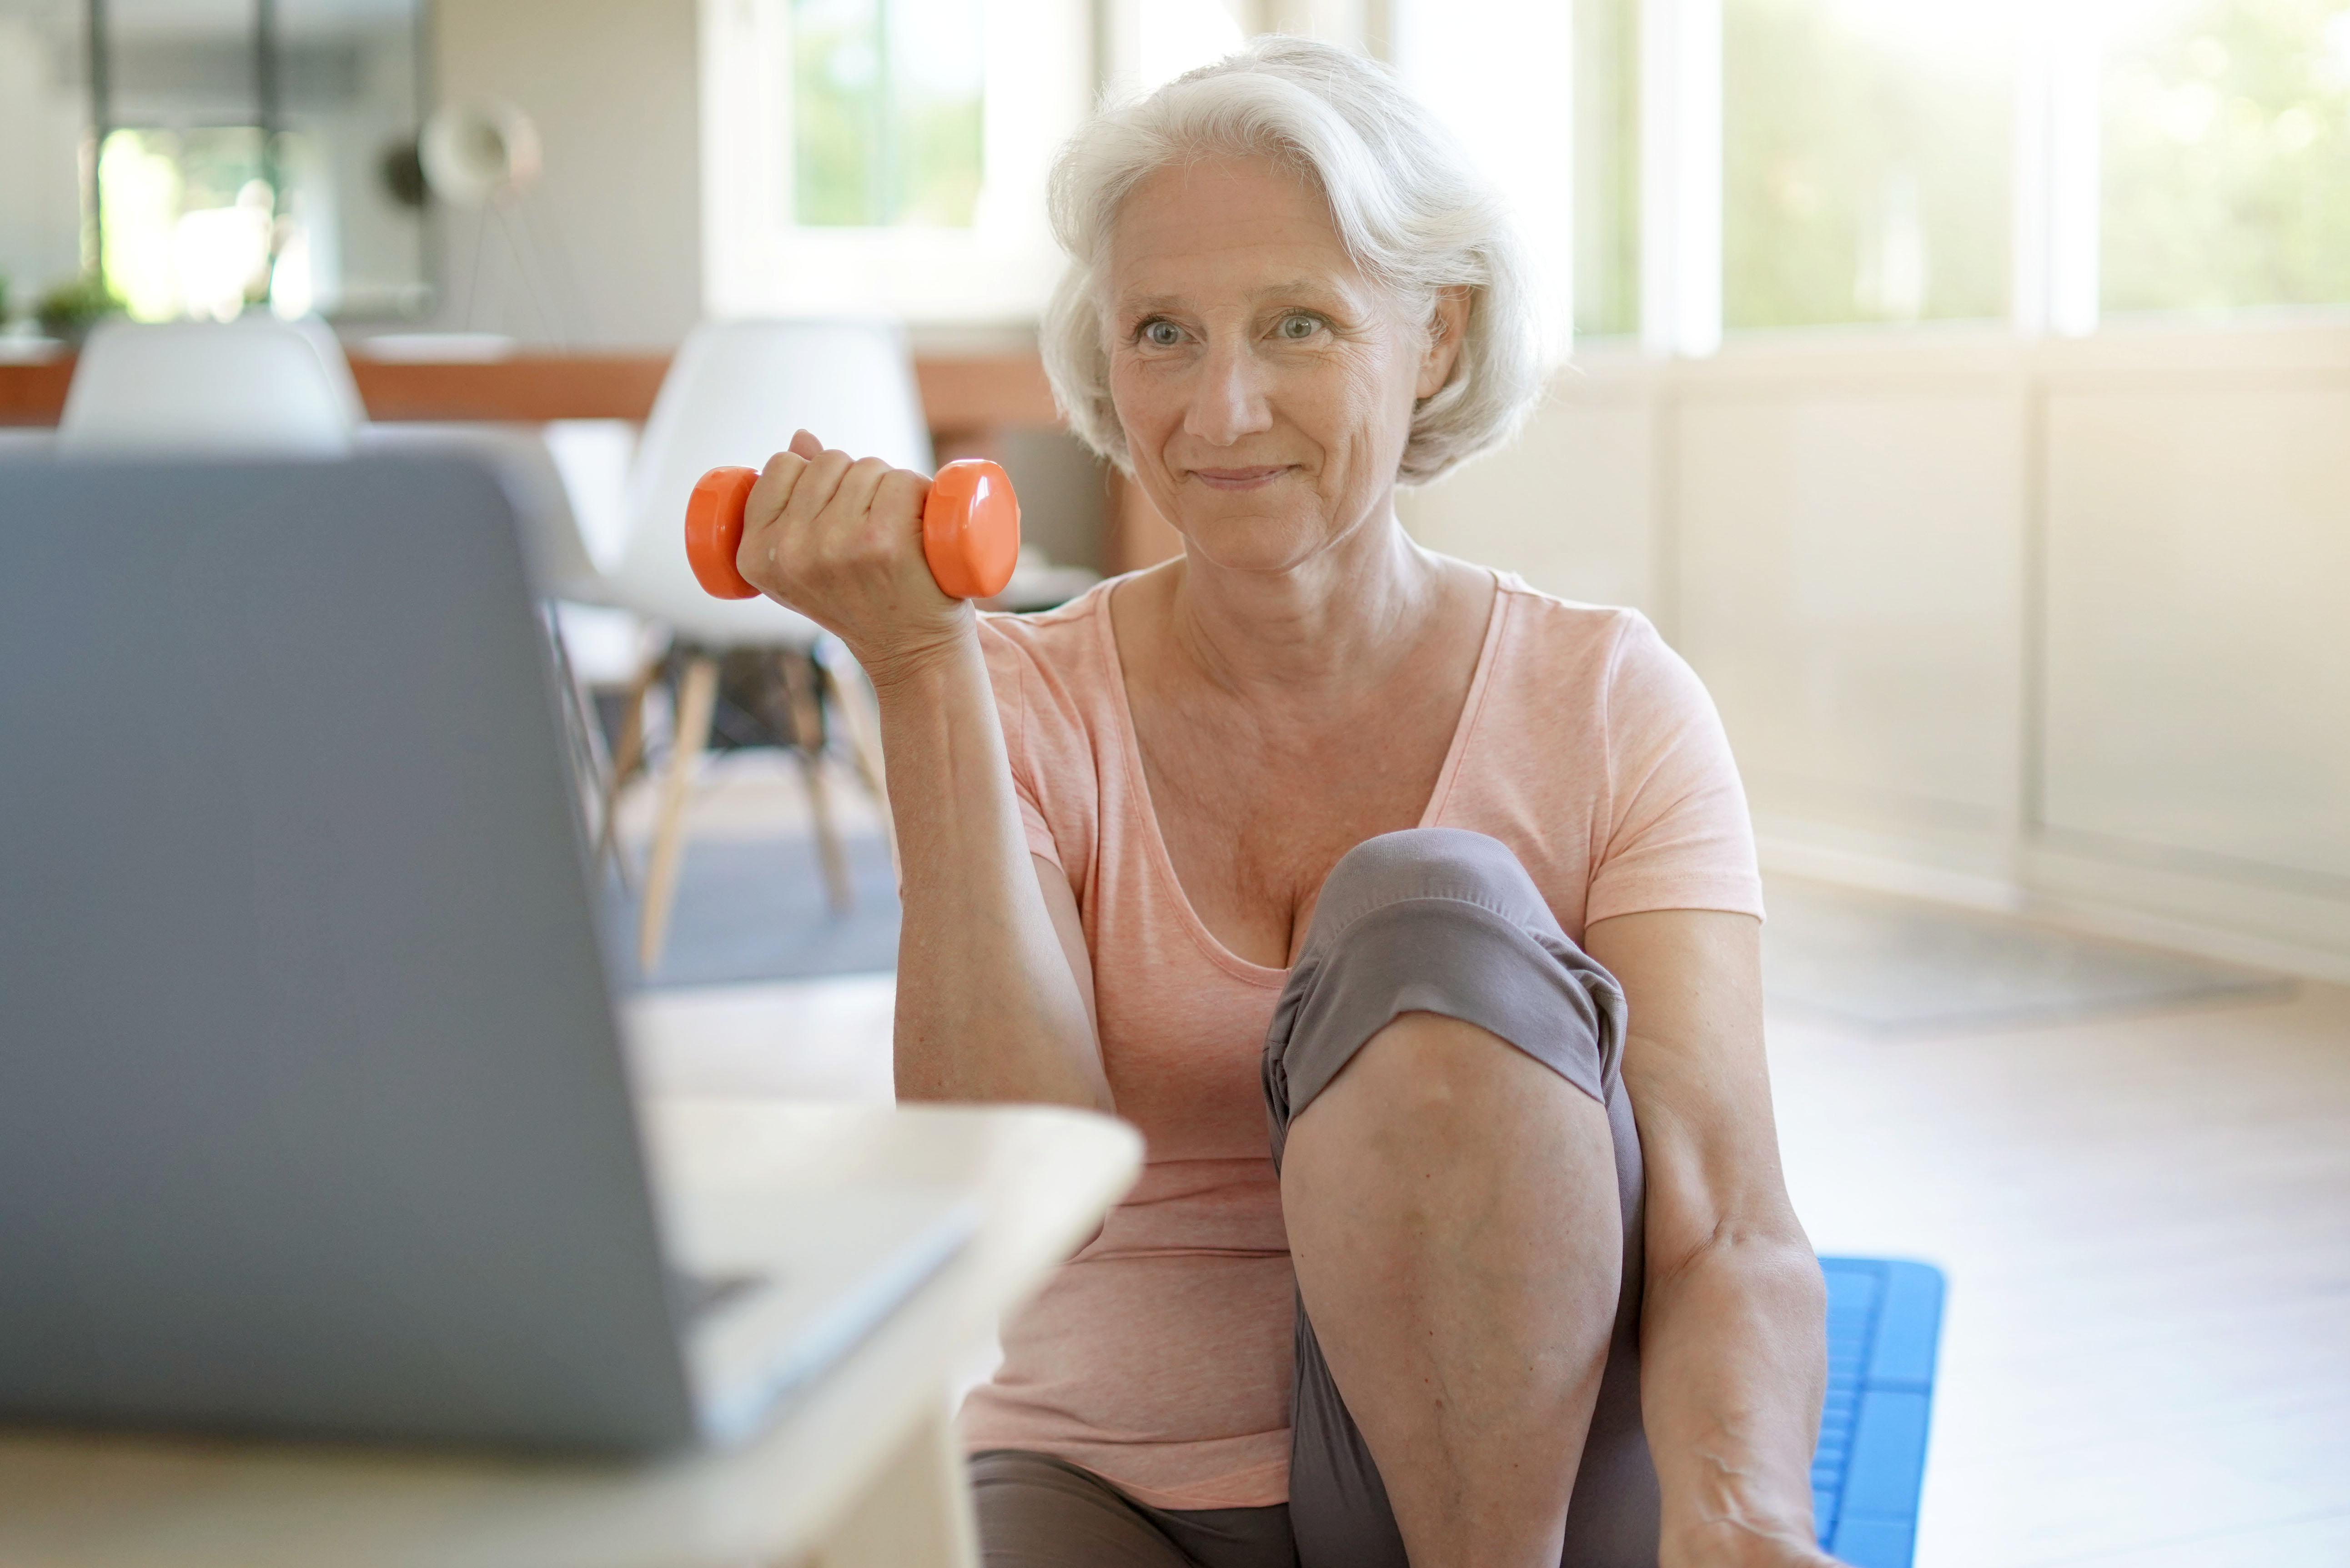 Senior woman doing fitness exercises at home through virtual class | goodluz - stock.adobe.com